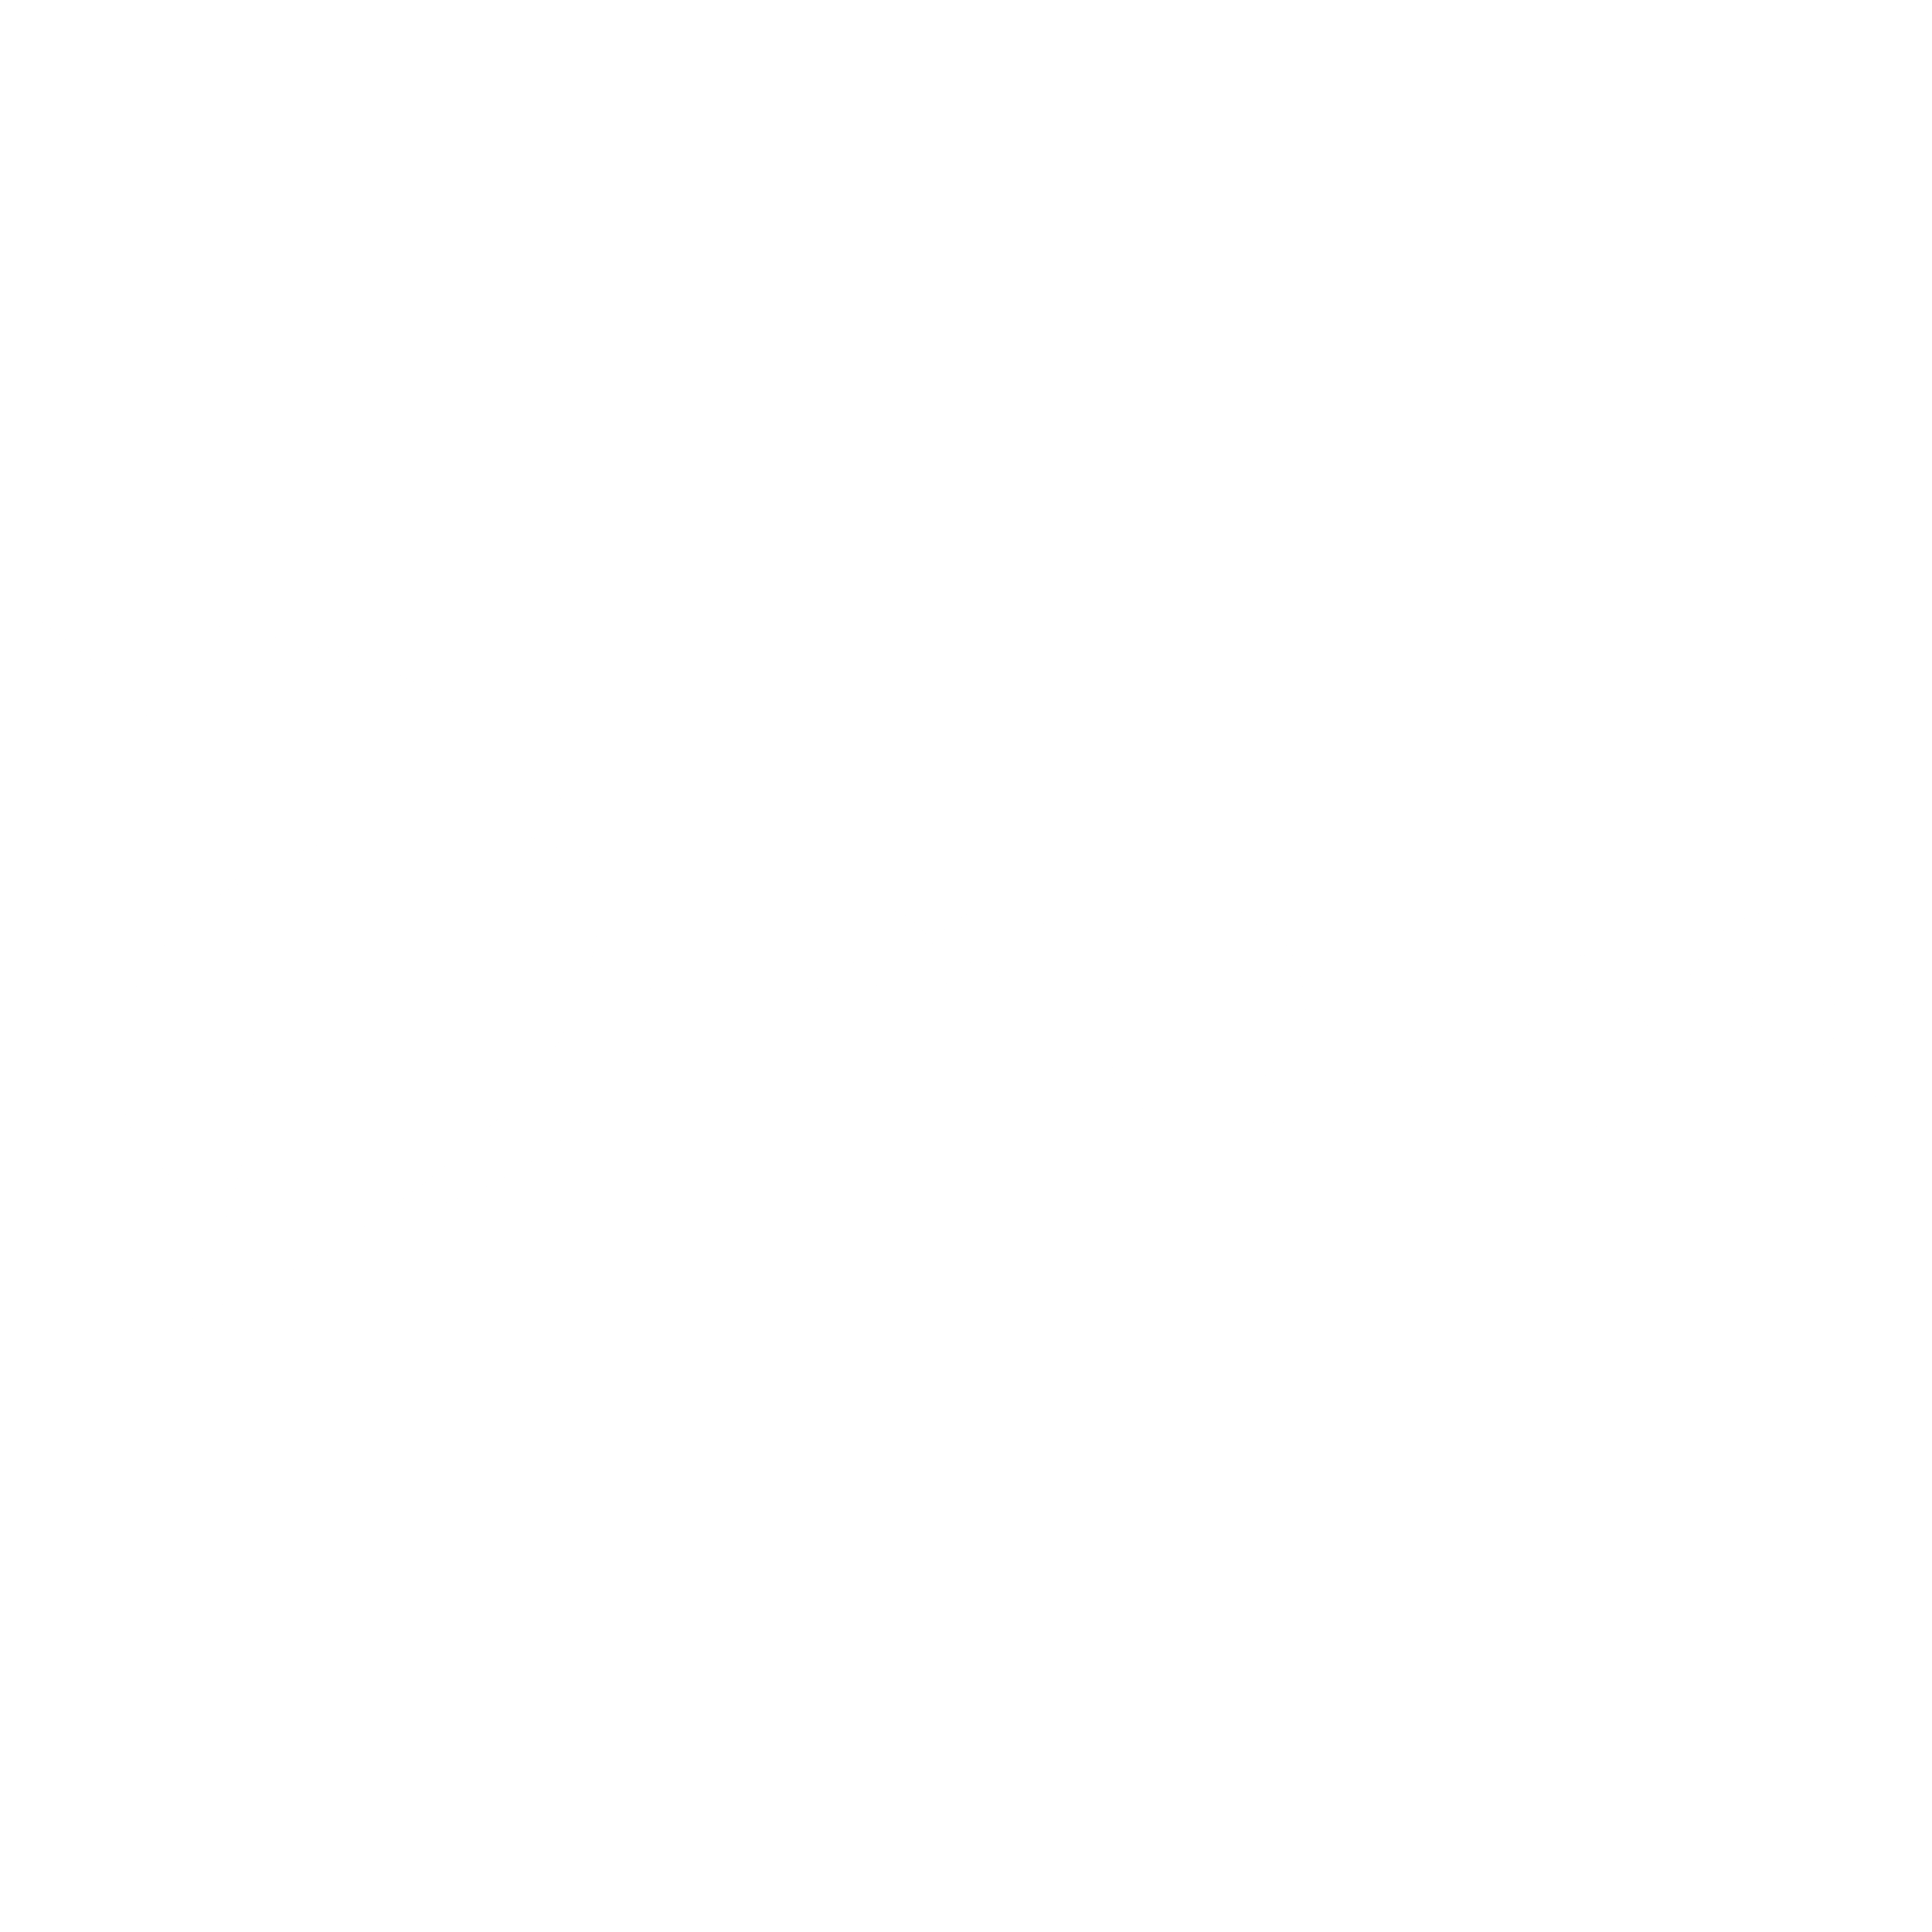 Metso Logo - Metso Logo PNG Transparent & SVG Vector - Freebie Supply